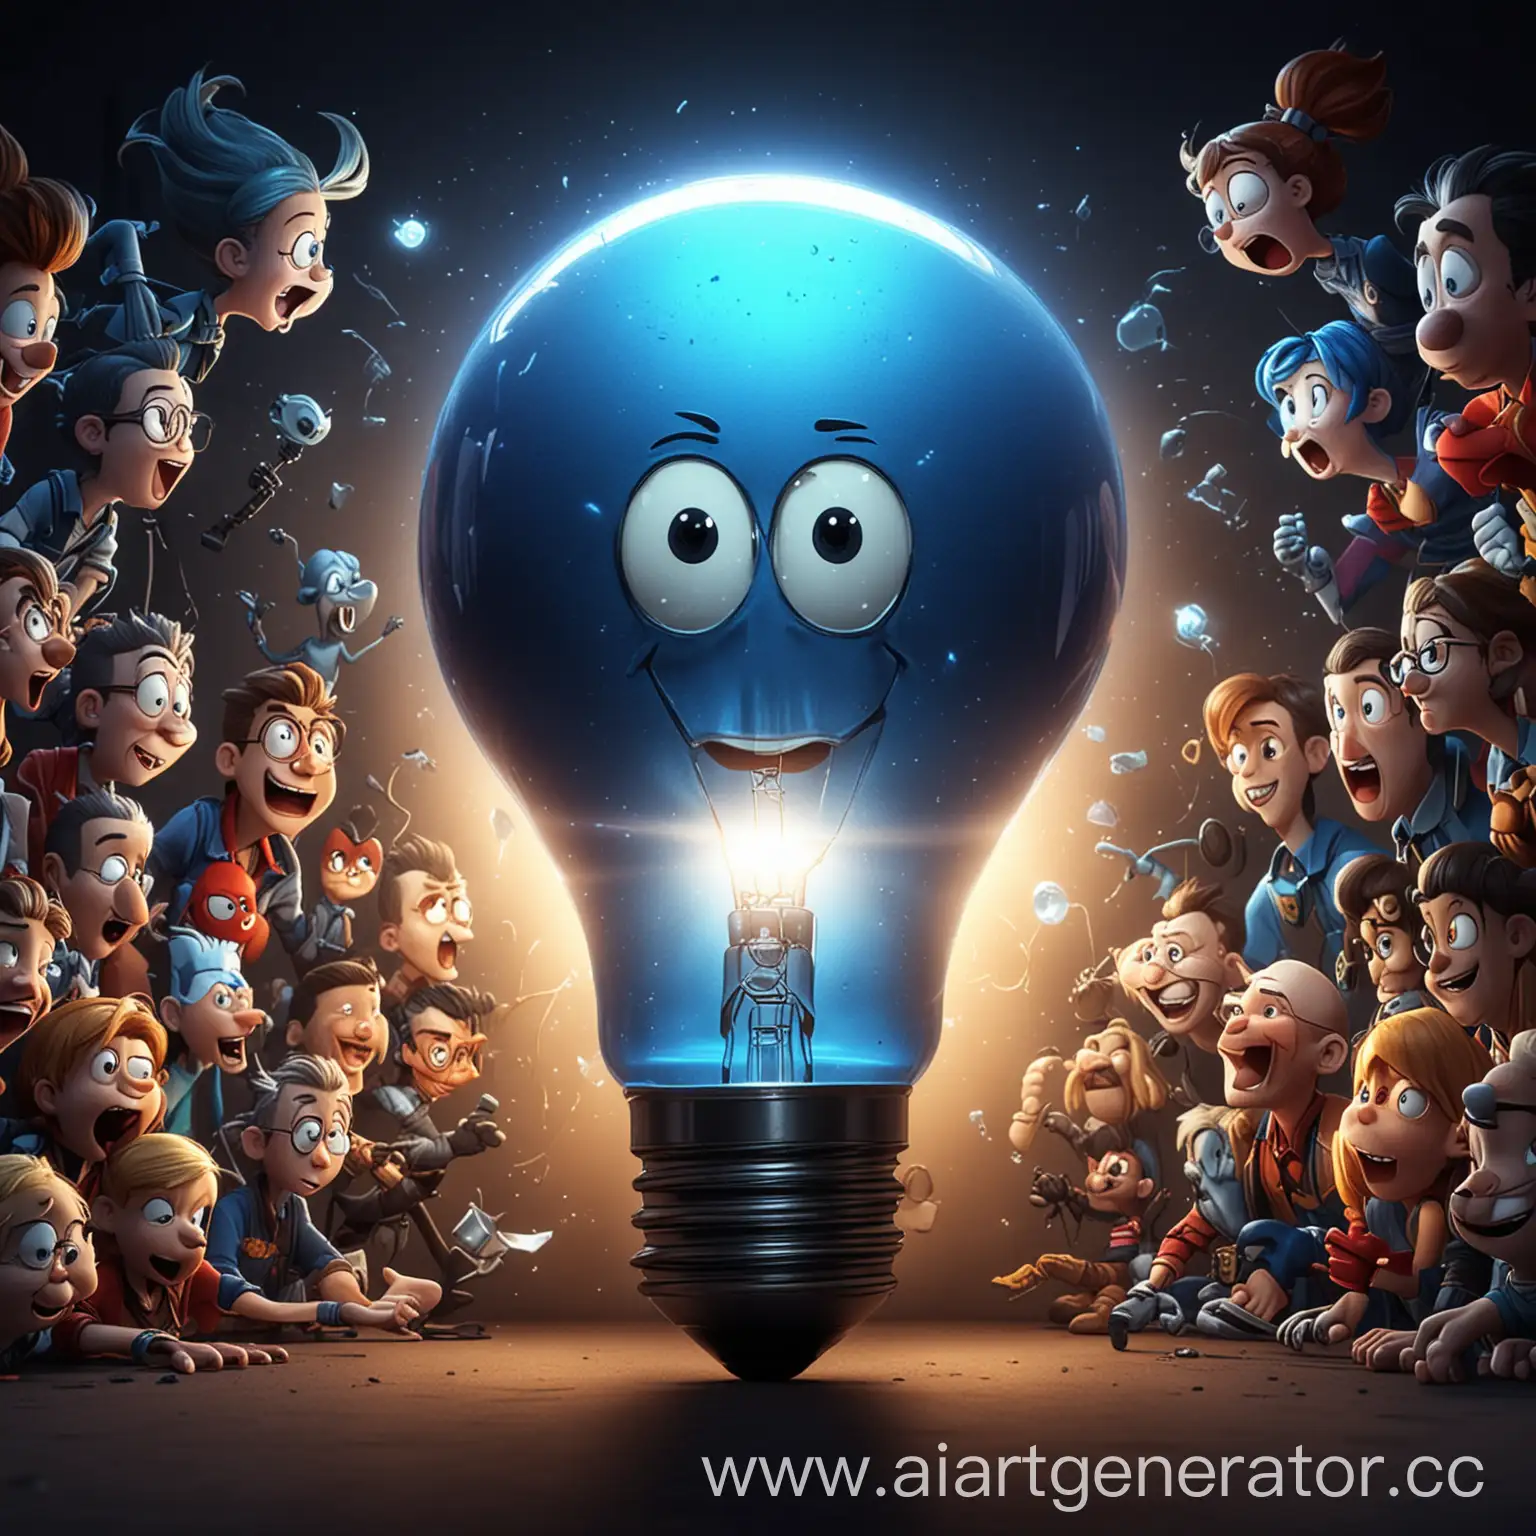 Blue-Light-Bulb-Bursting-with-Cartoon-Heroes-in-4K